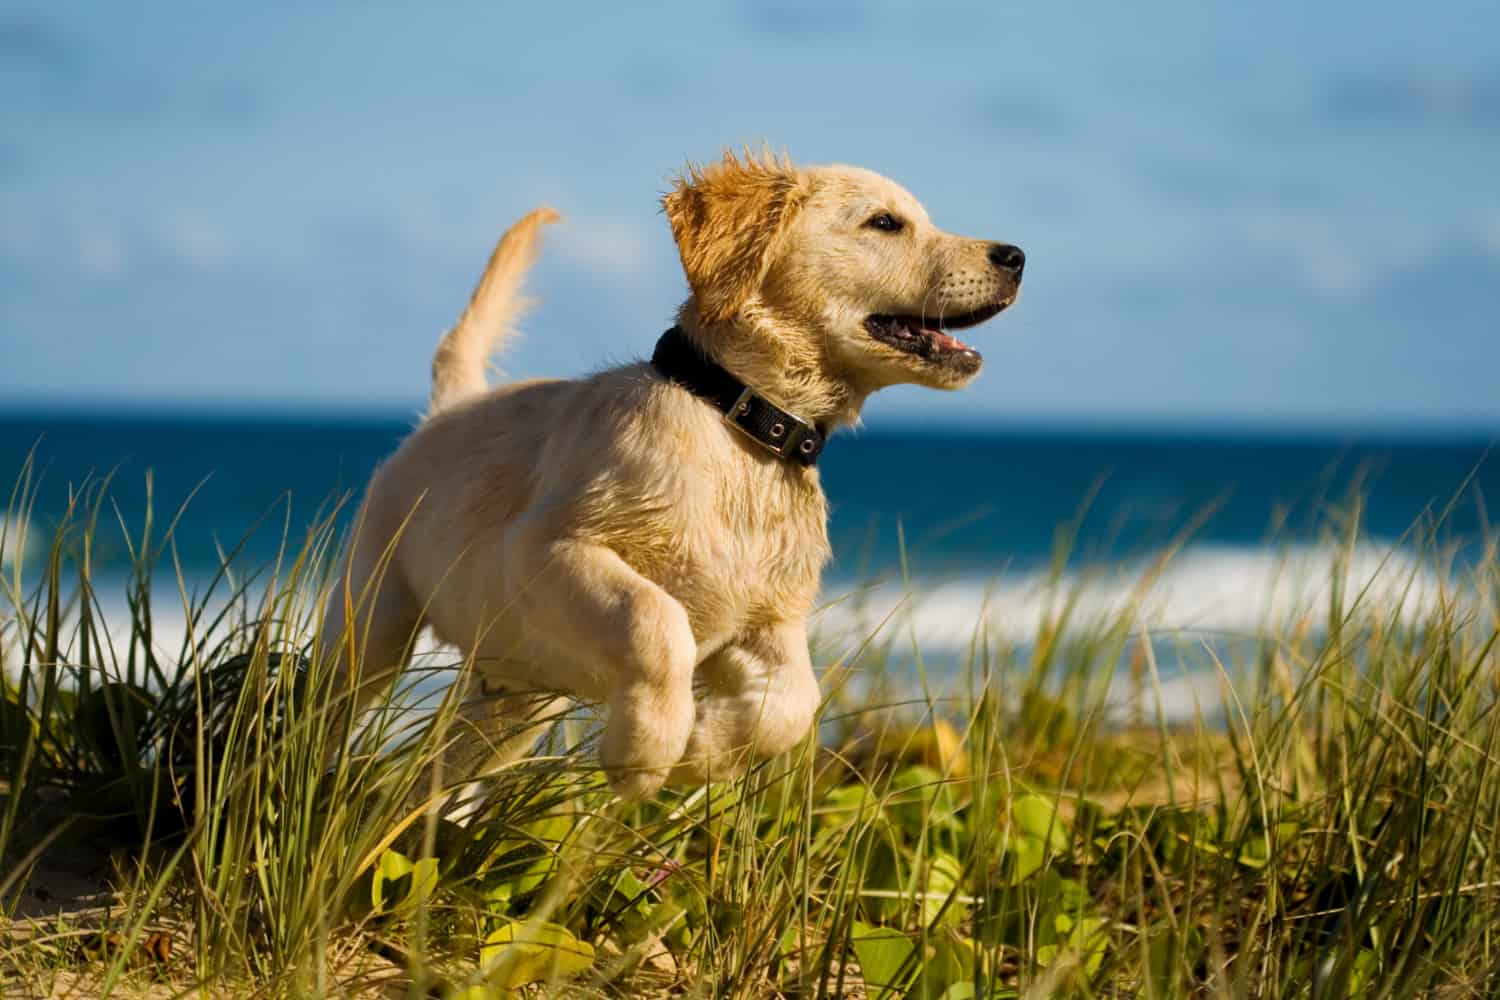 Puppy playing near a beach